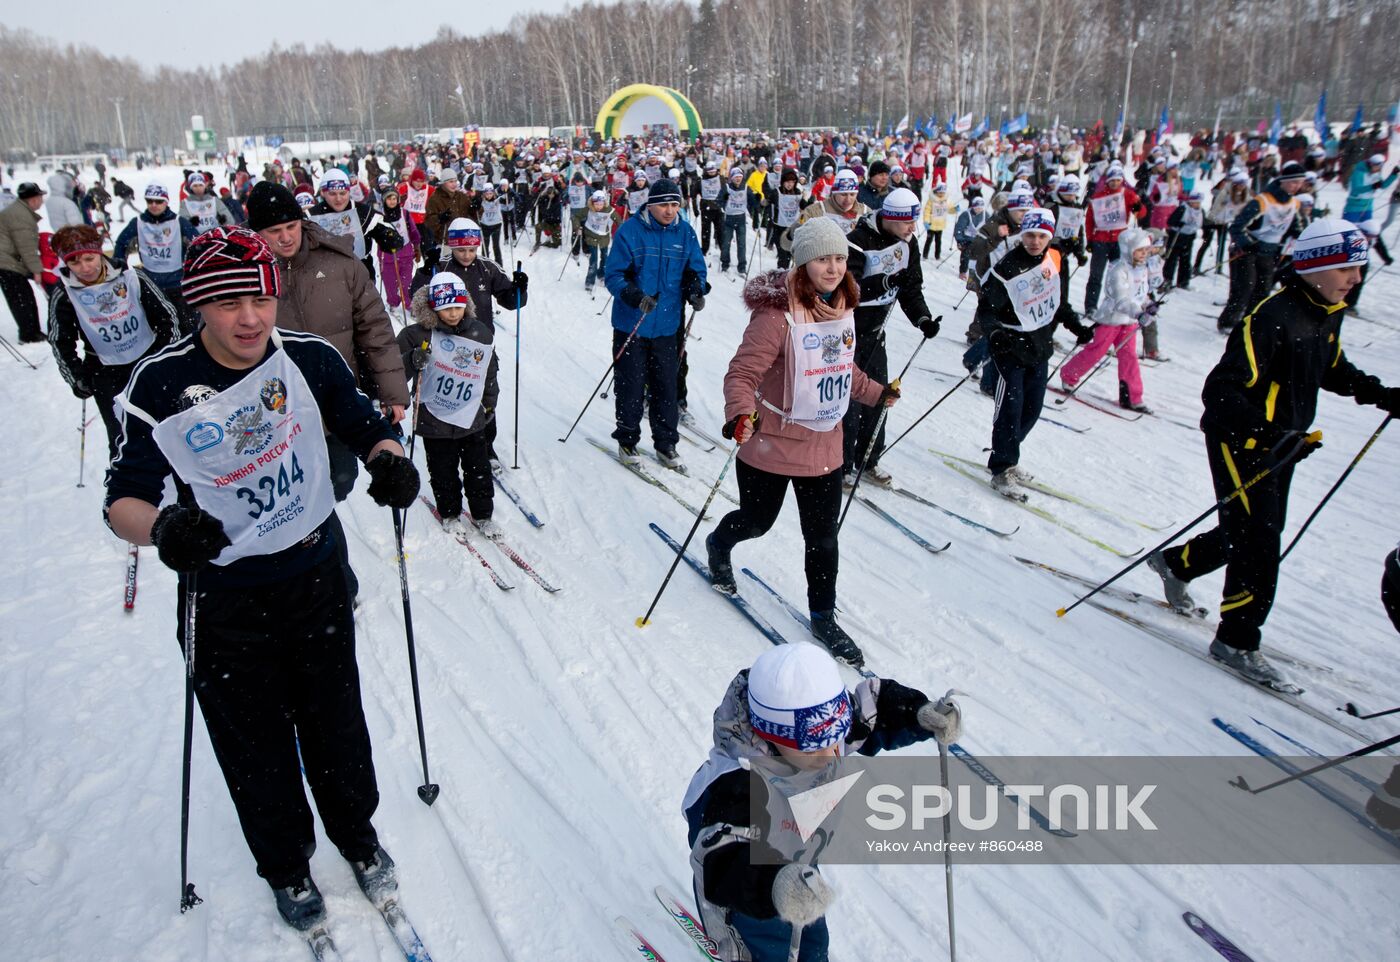 Russian Ski Track 2011 nationwide race in Tomsk